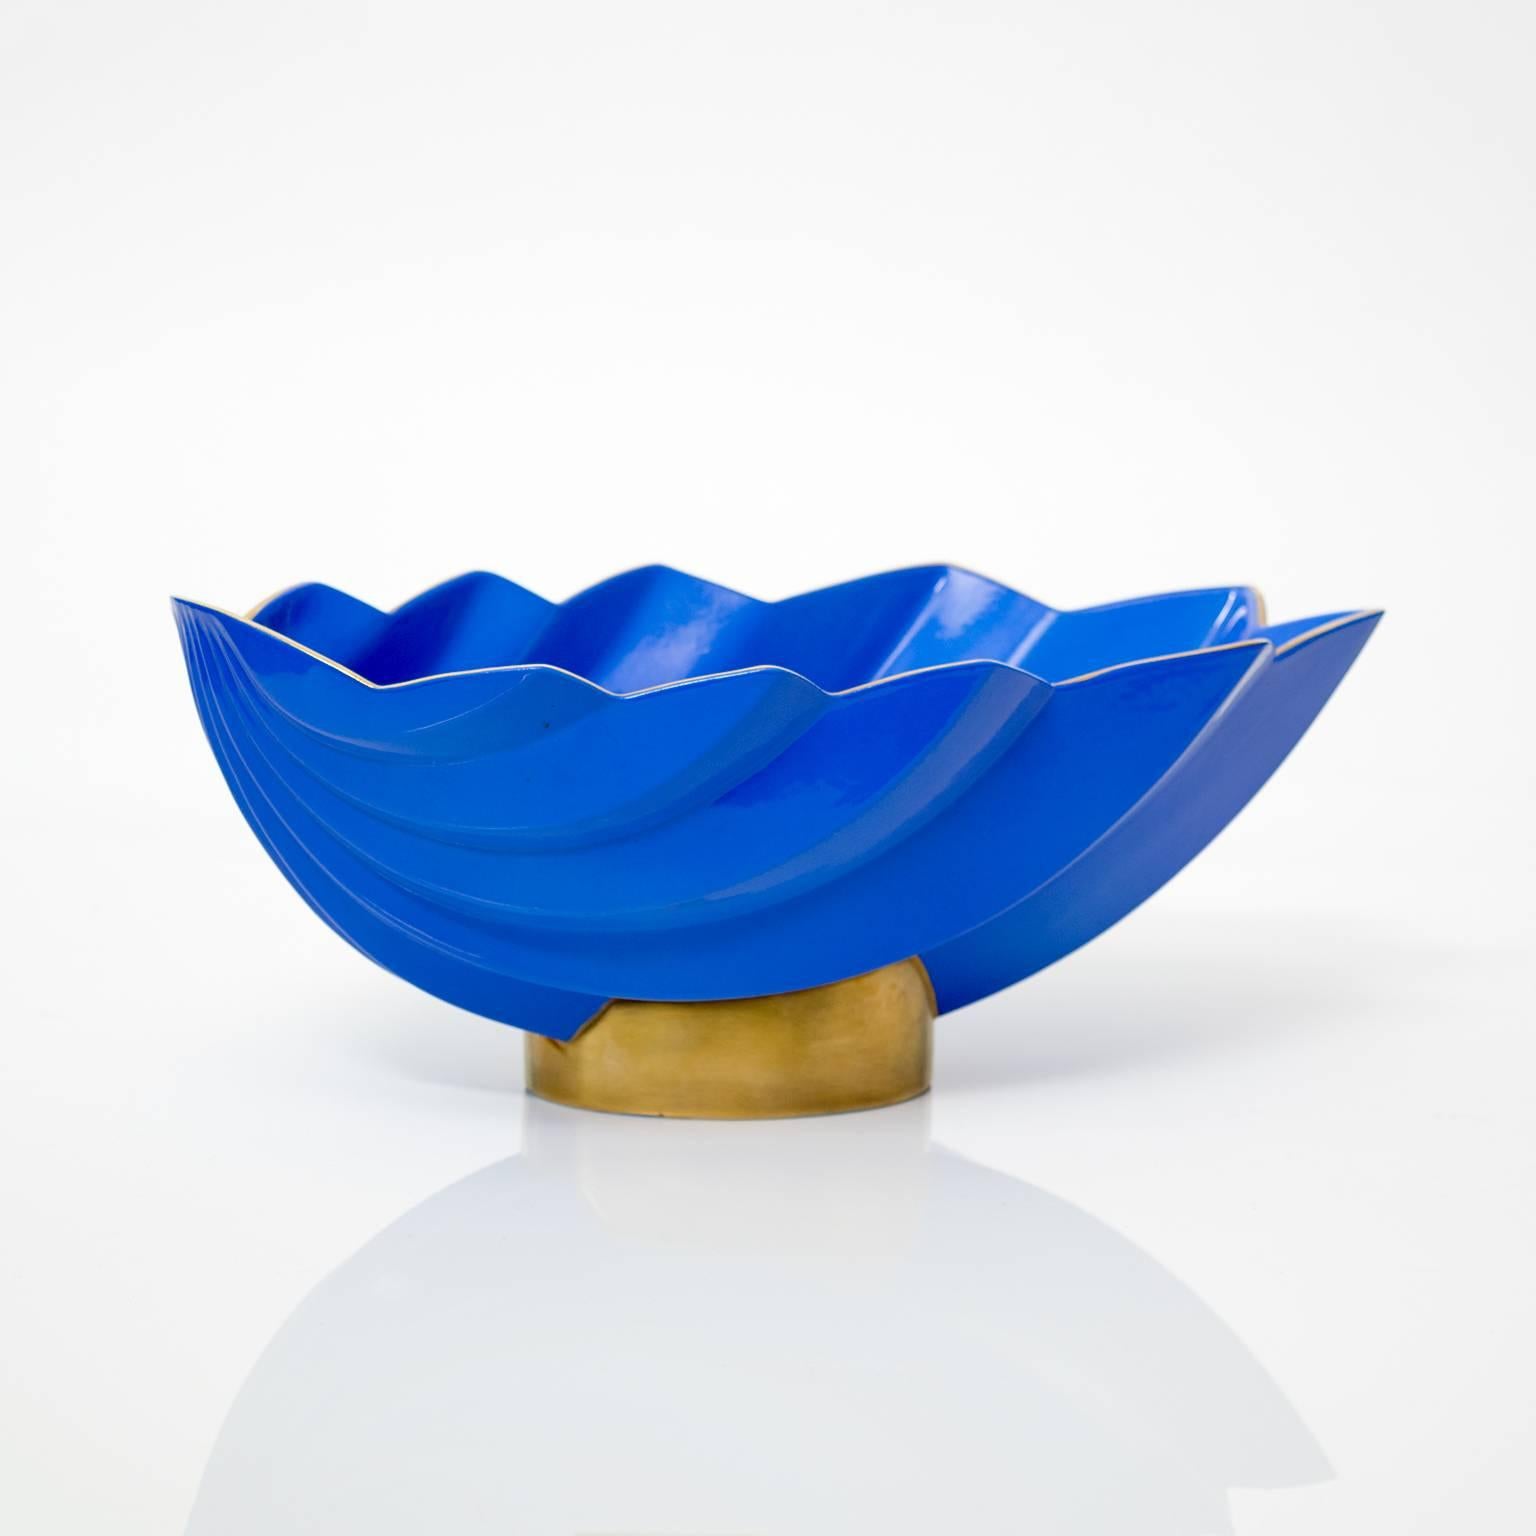 A large elegant Scandinavian Modern cobalt blue colored glaze ceramic footed bowl with gold details. Designed by Karin Bjornquist for Rörstrand, Sweden, signed and dated 1993 on the bottom length.